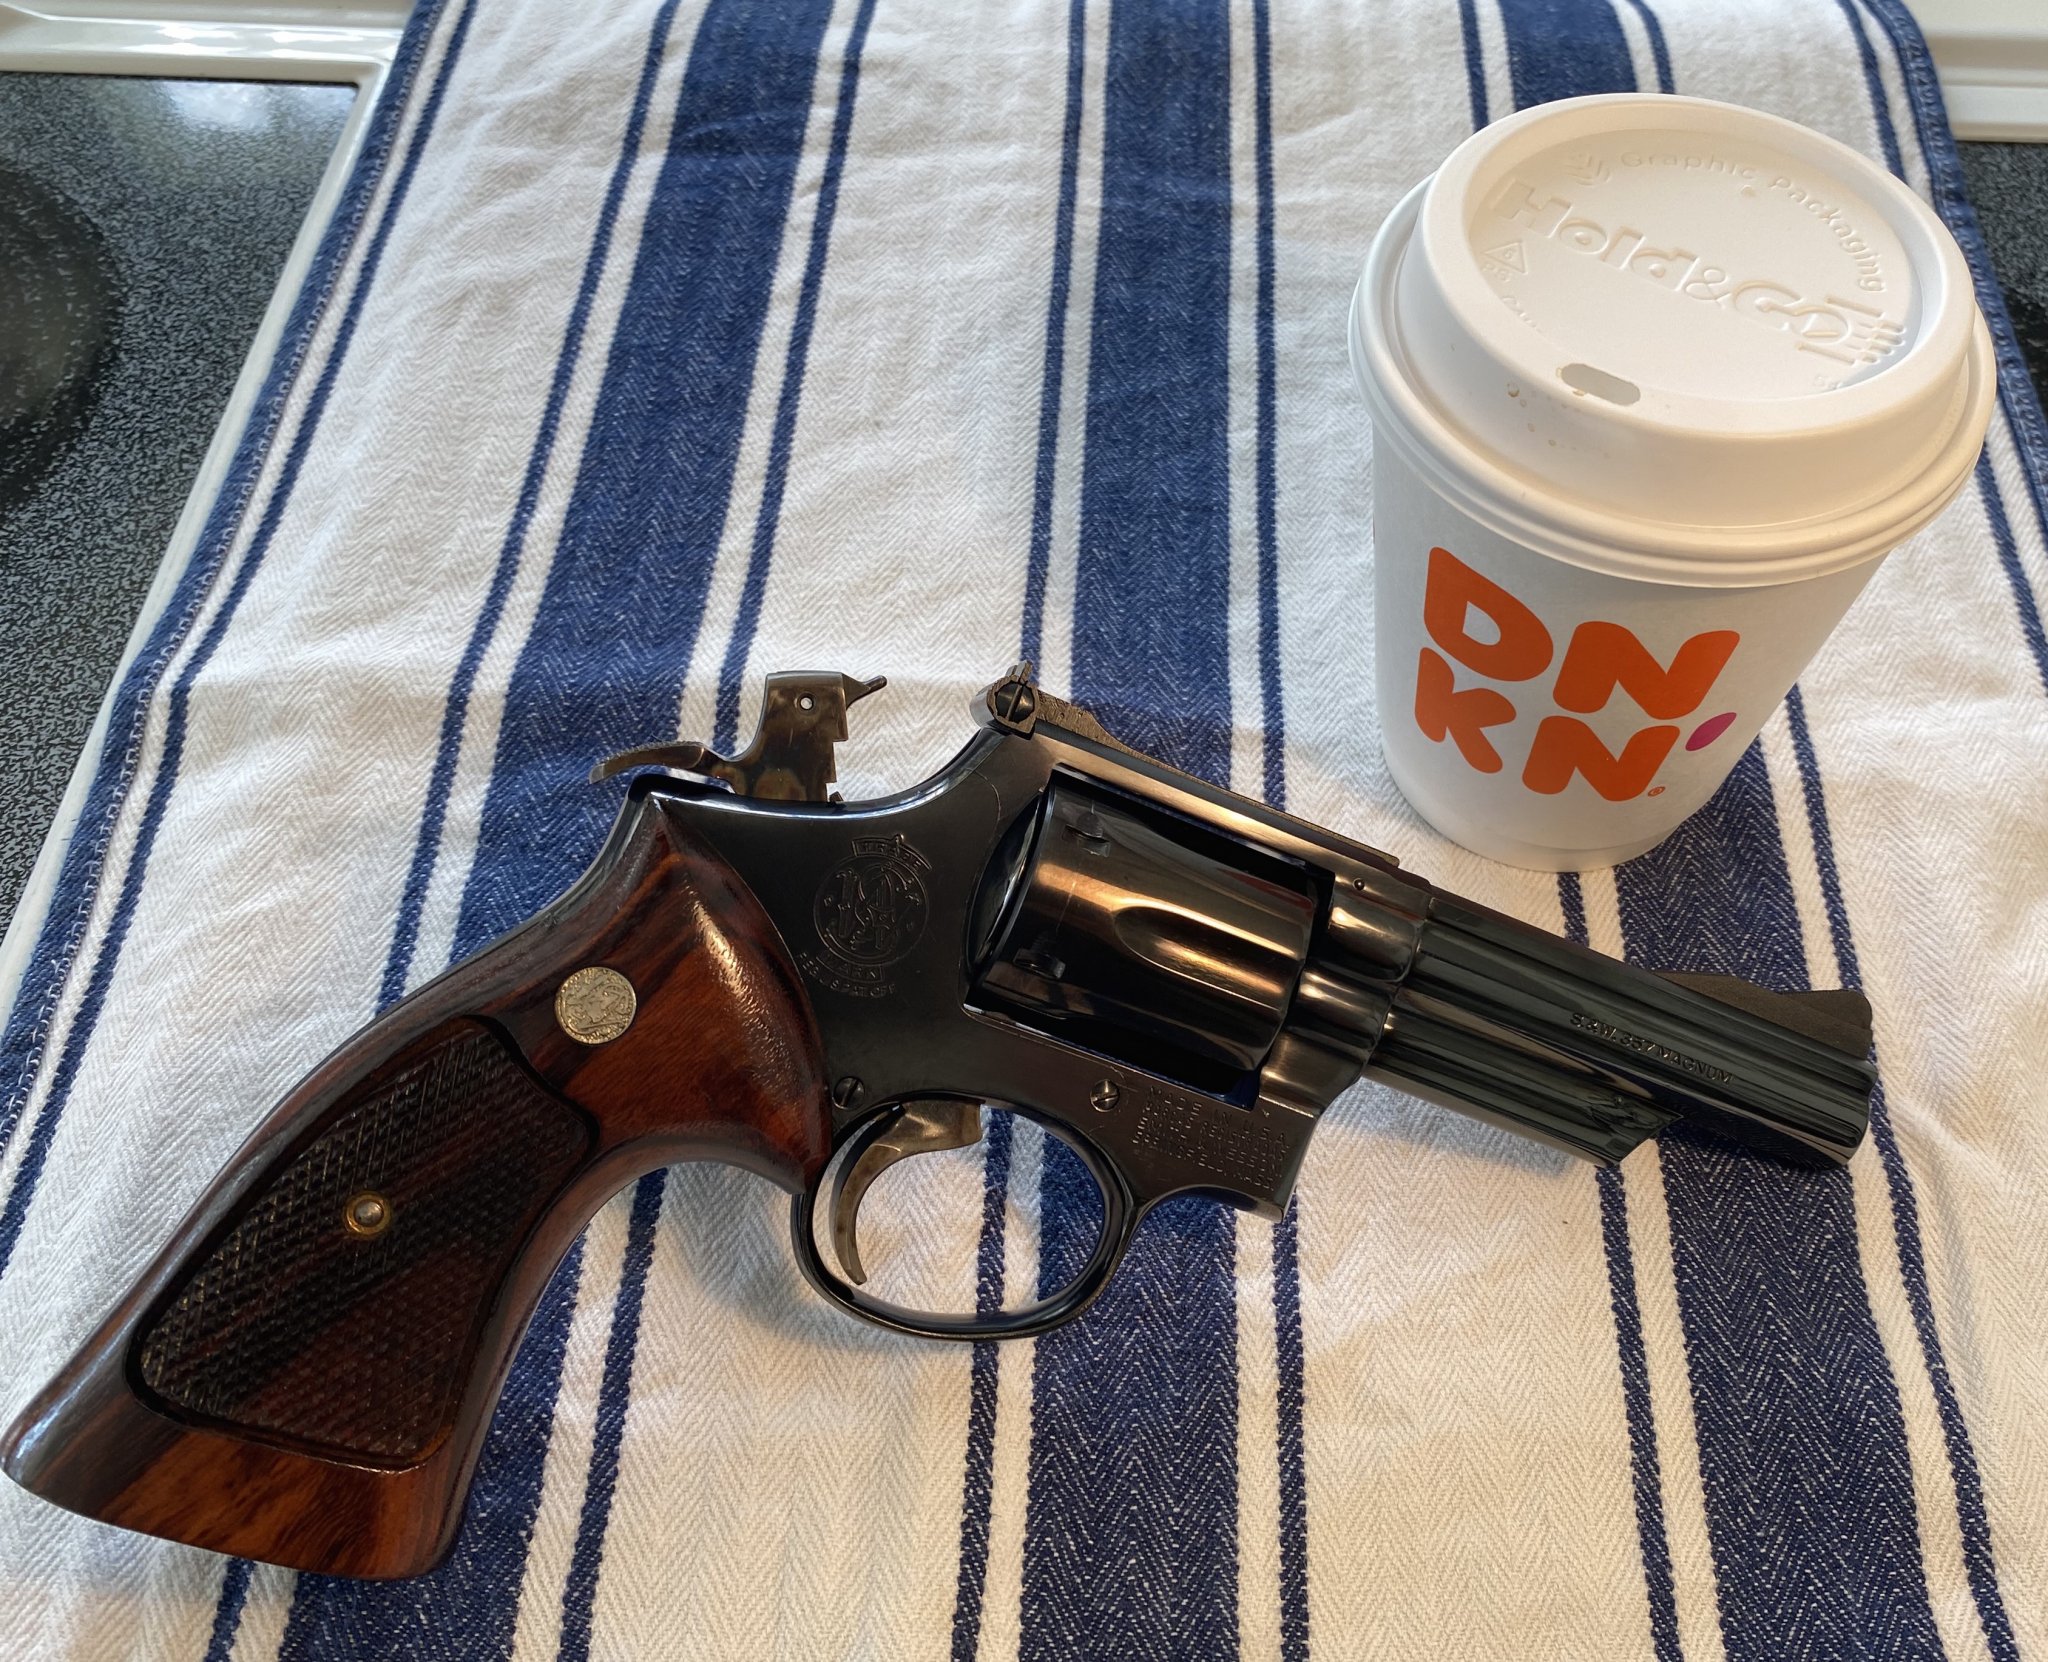 IMG_8495Smith & Wesson Model 19-3 .357 Mag 4 Barrel Guns with Coffee Photos 03.13.21.jpg